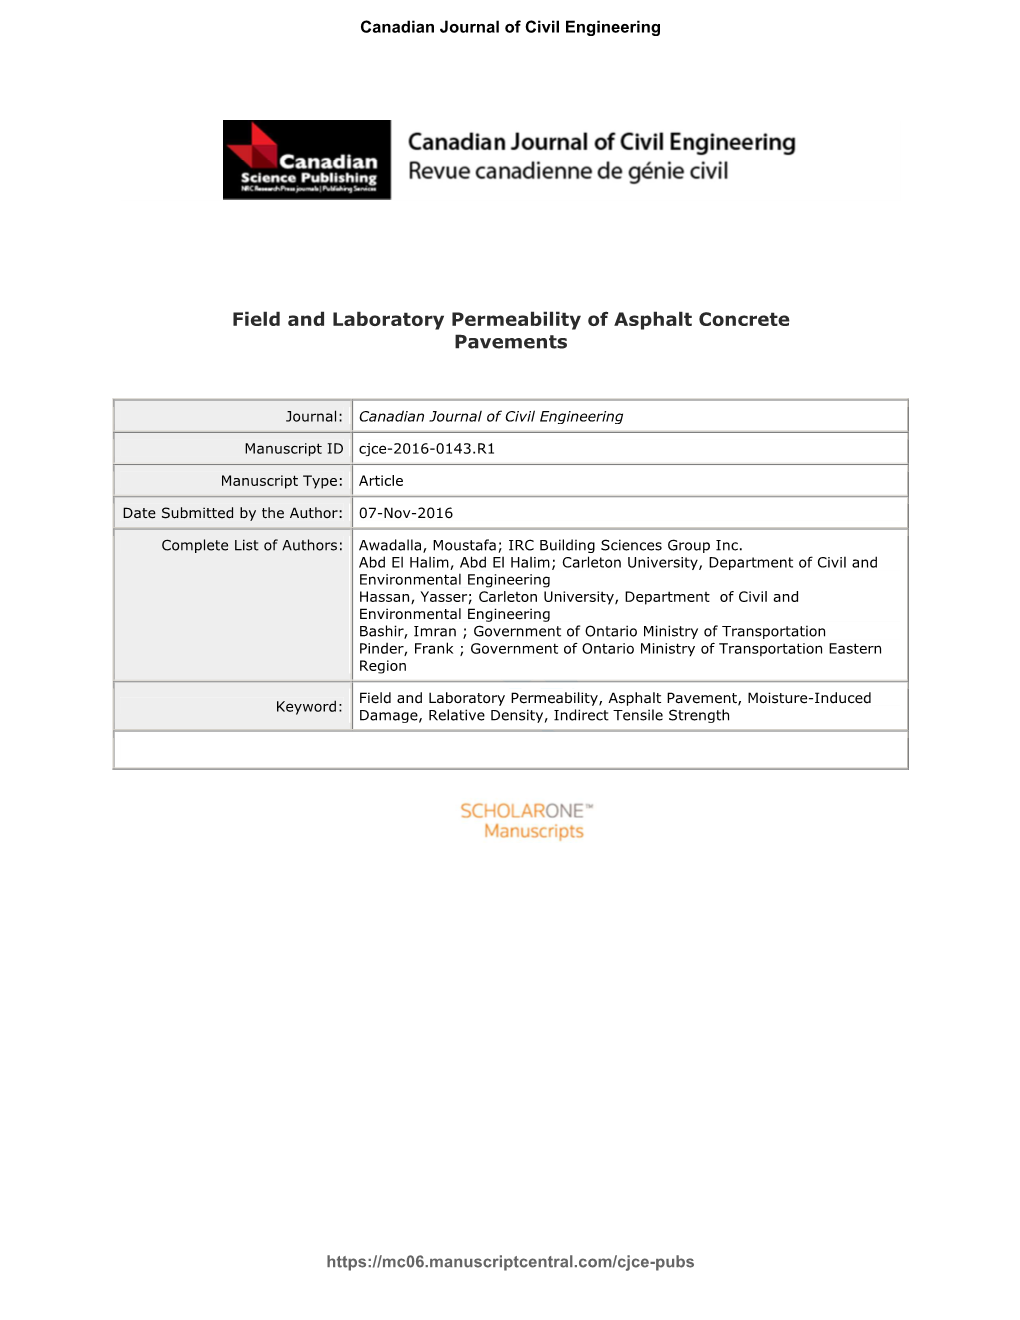 Field and Laboratory Permeability of Asphalt Concrete Pavements